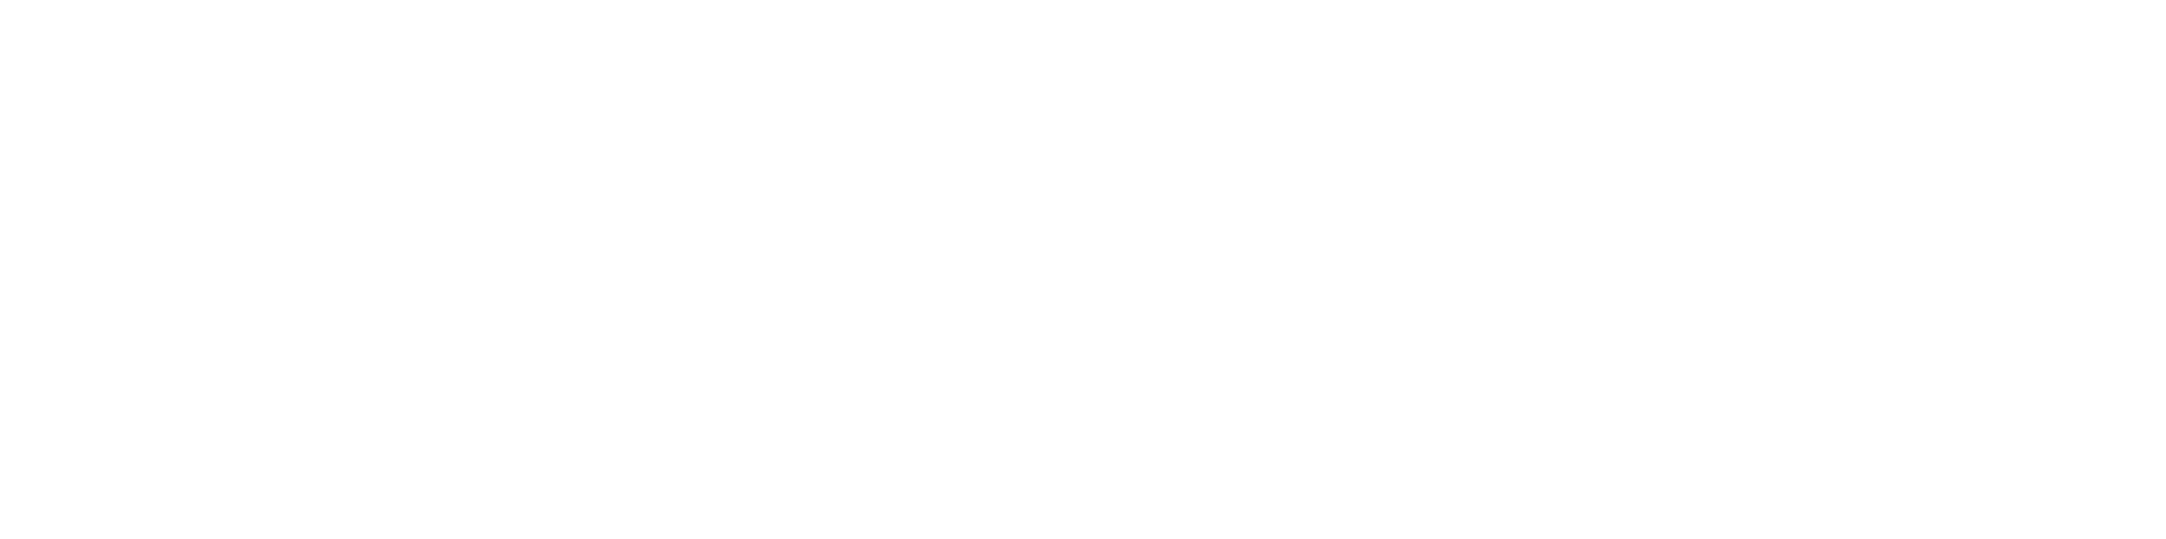 VetCT logo WHITE-1